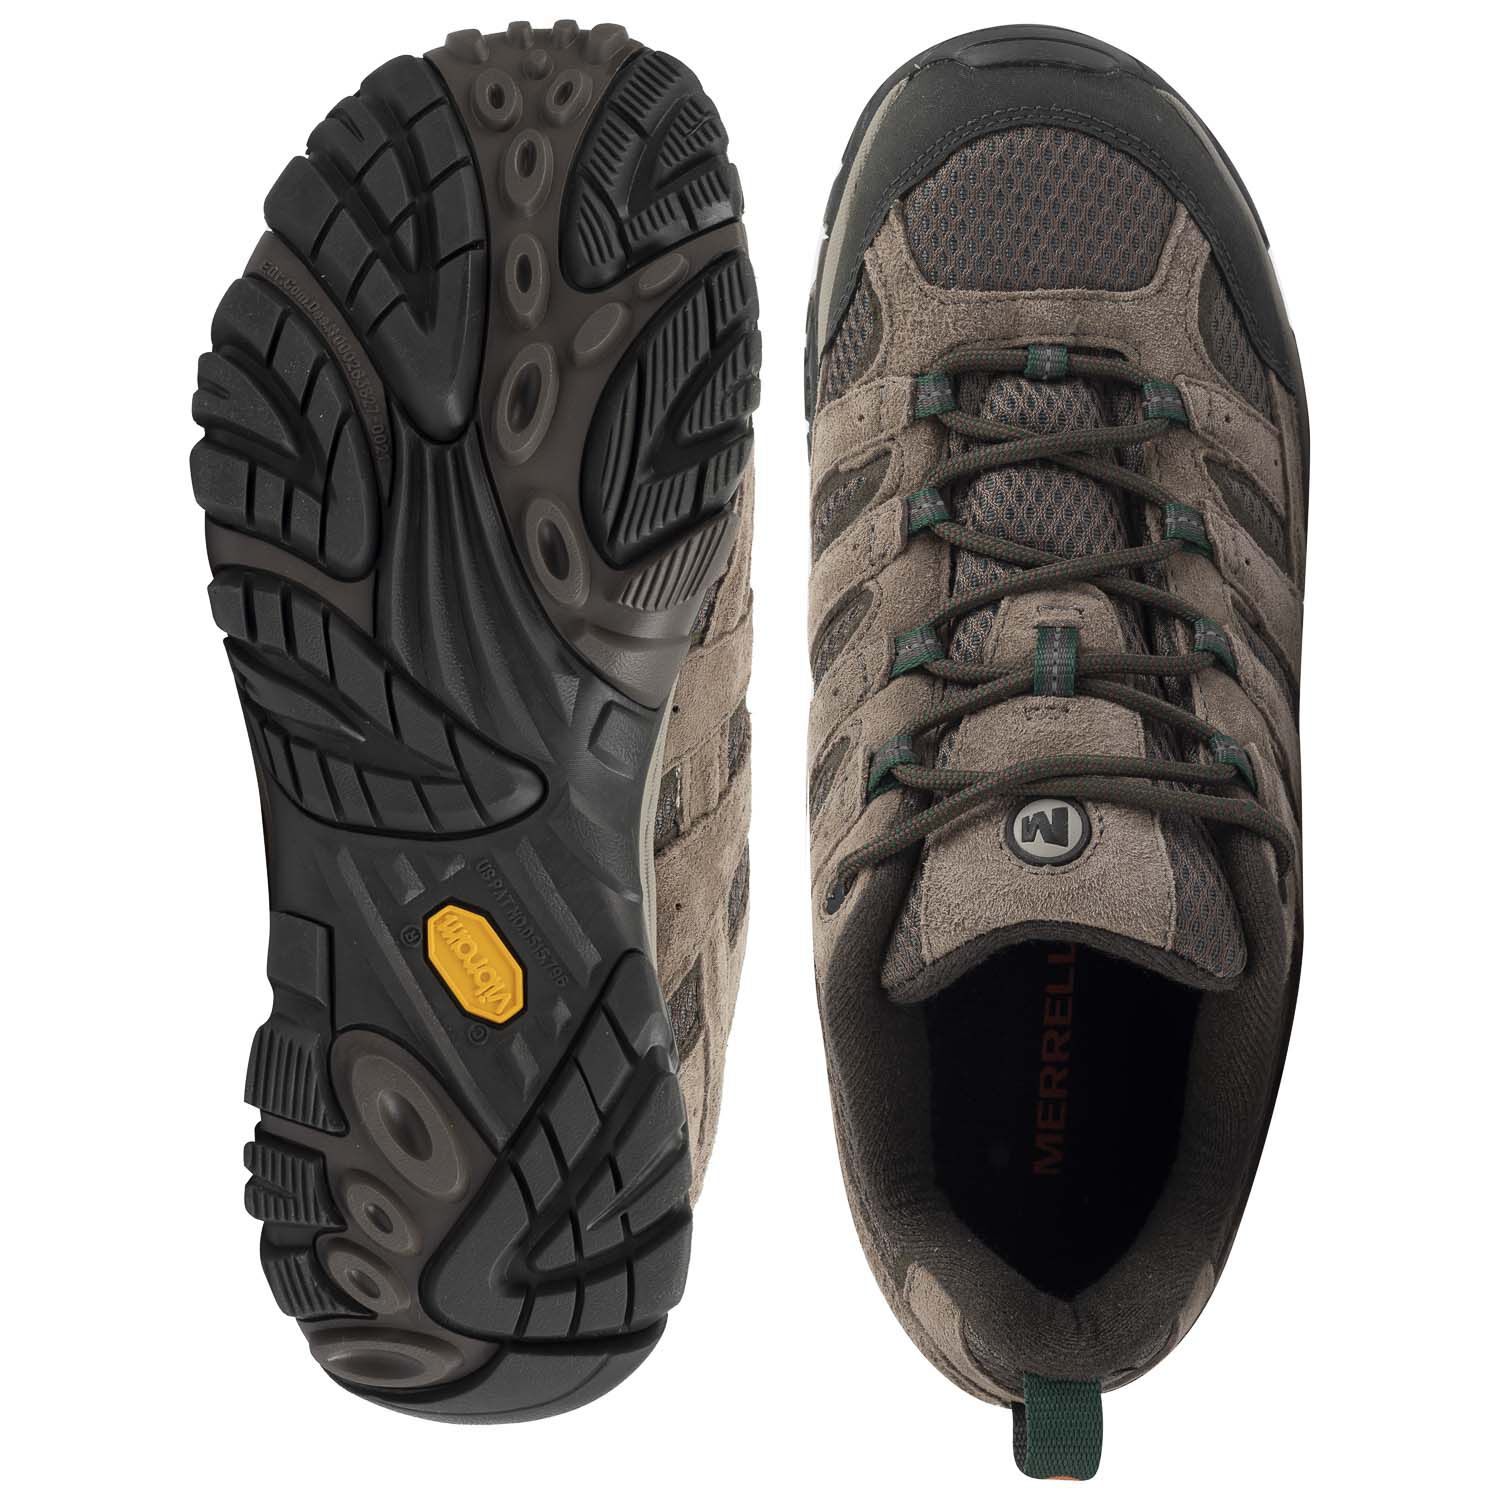 merrell moab 2 ventilator mens walking shoes